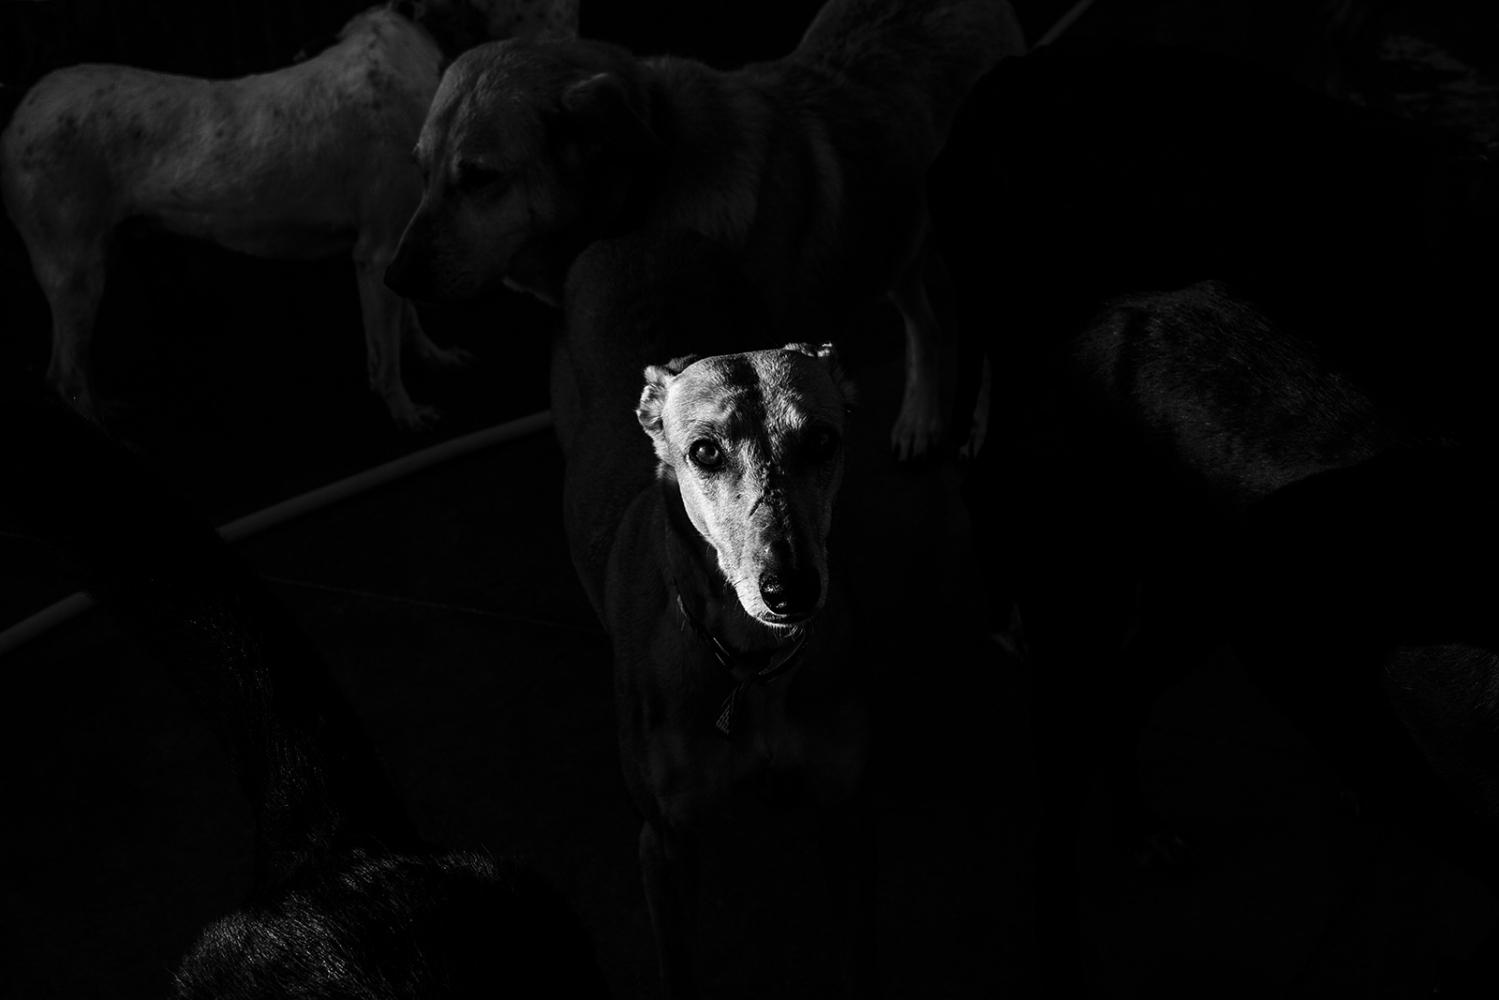  Spanish Greyhound. Dog used for hunting activities. 